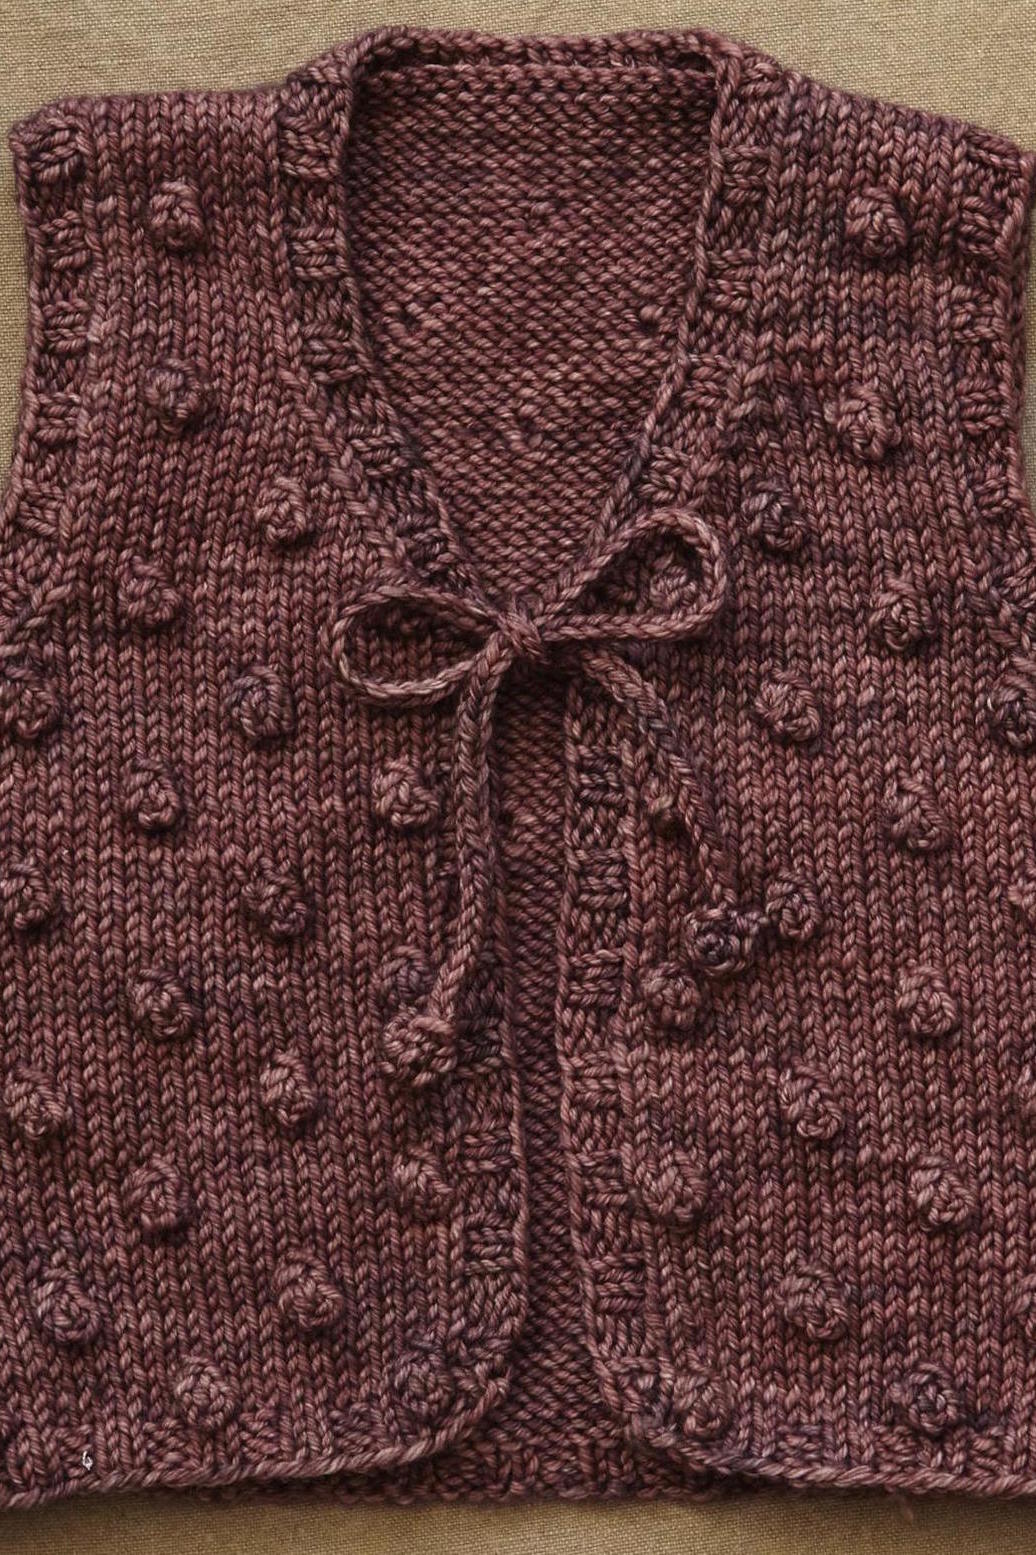 Digital Knitting Pattern - Popcorn Vest